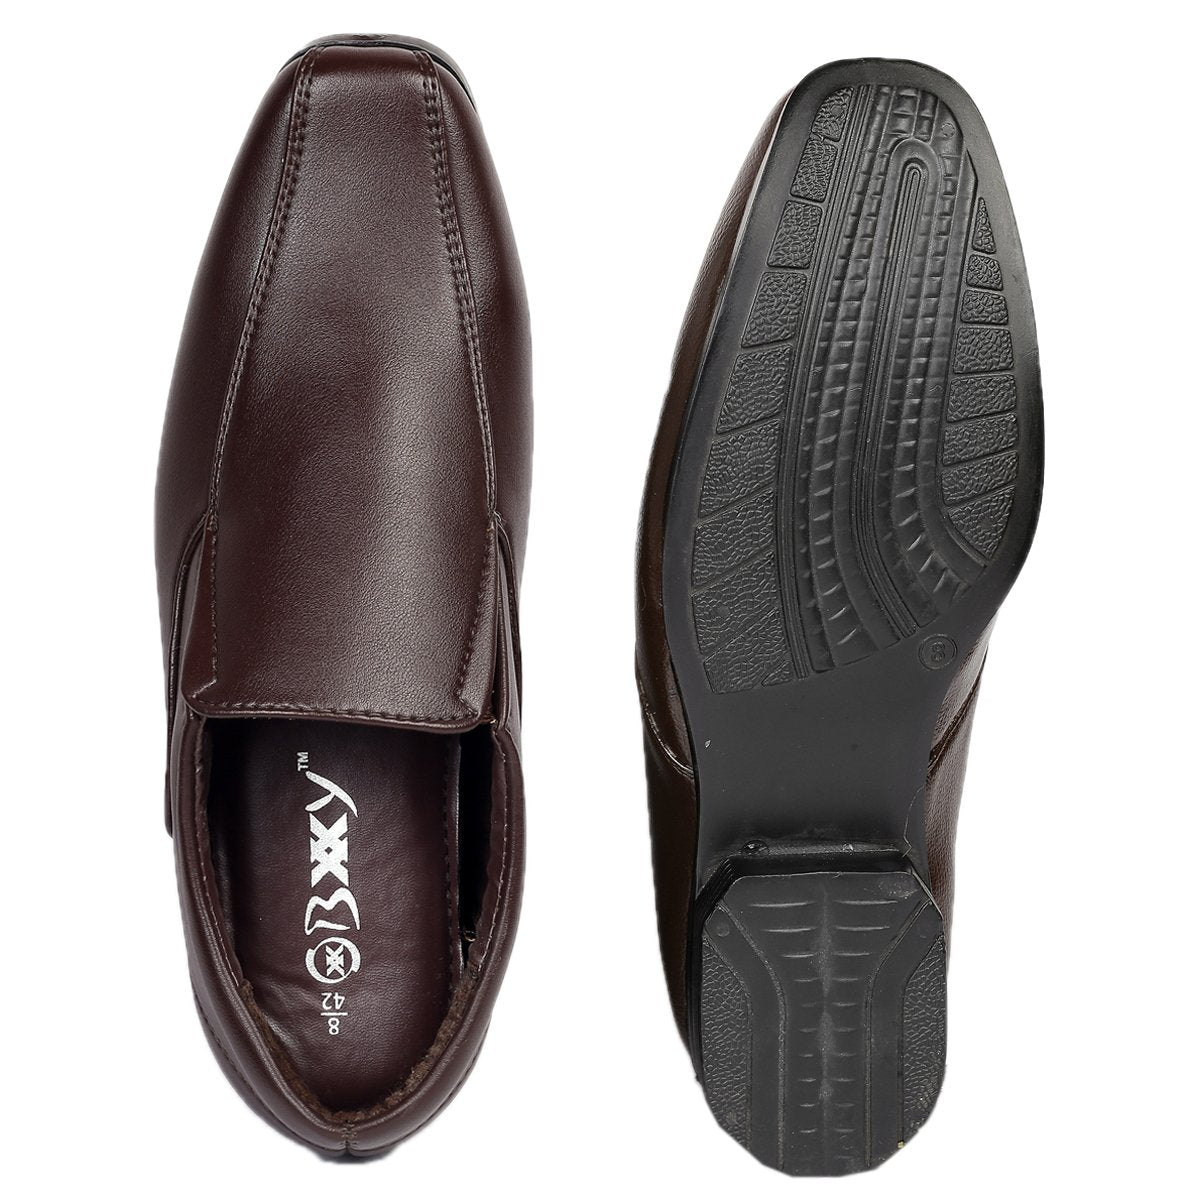 Men's 3 Inch Hidden Height Increasing Office Wear Slip-on Shoes